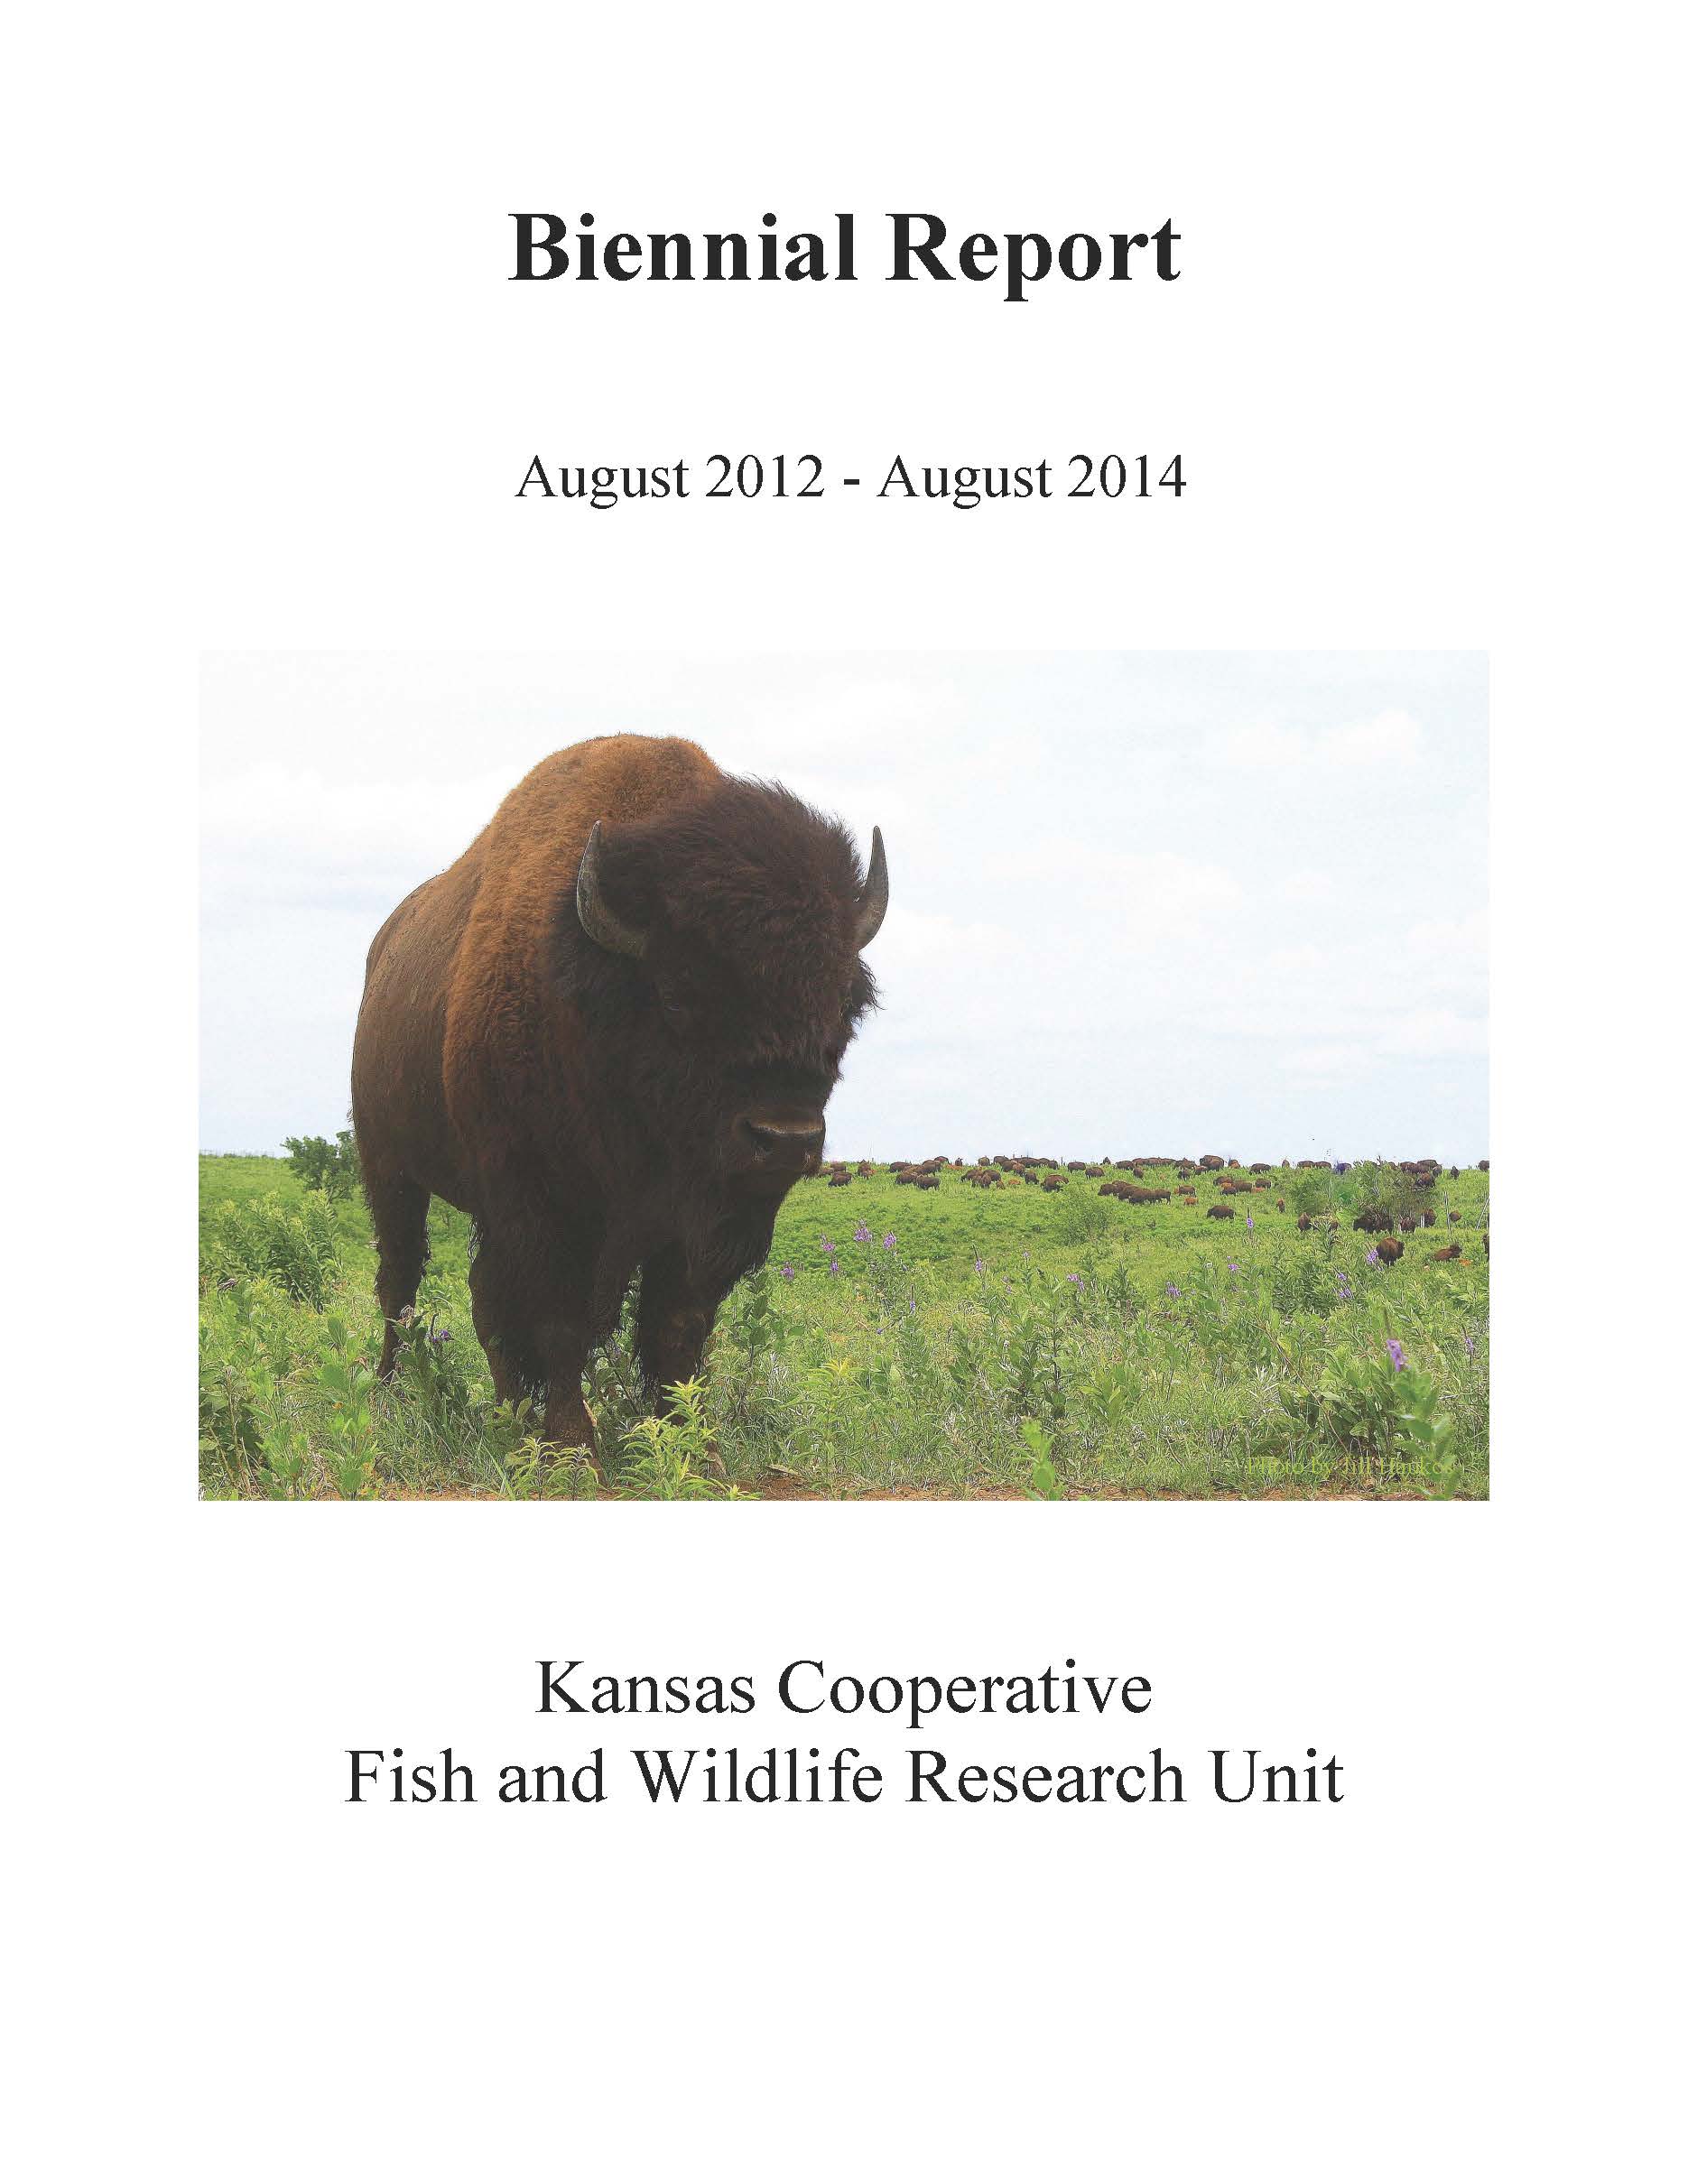 KSCFWRU Biennial Report 2014